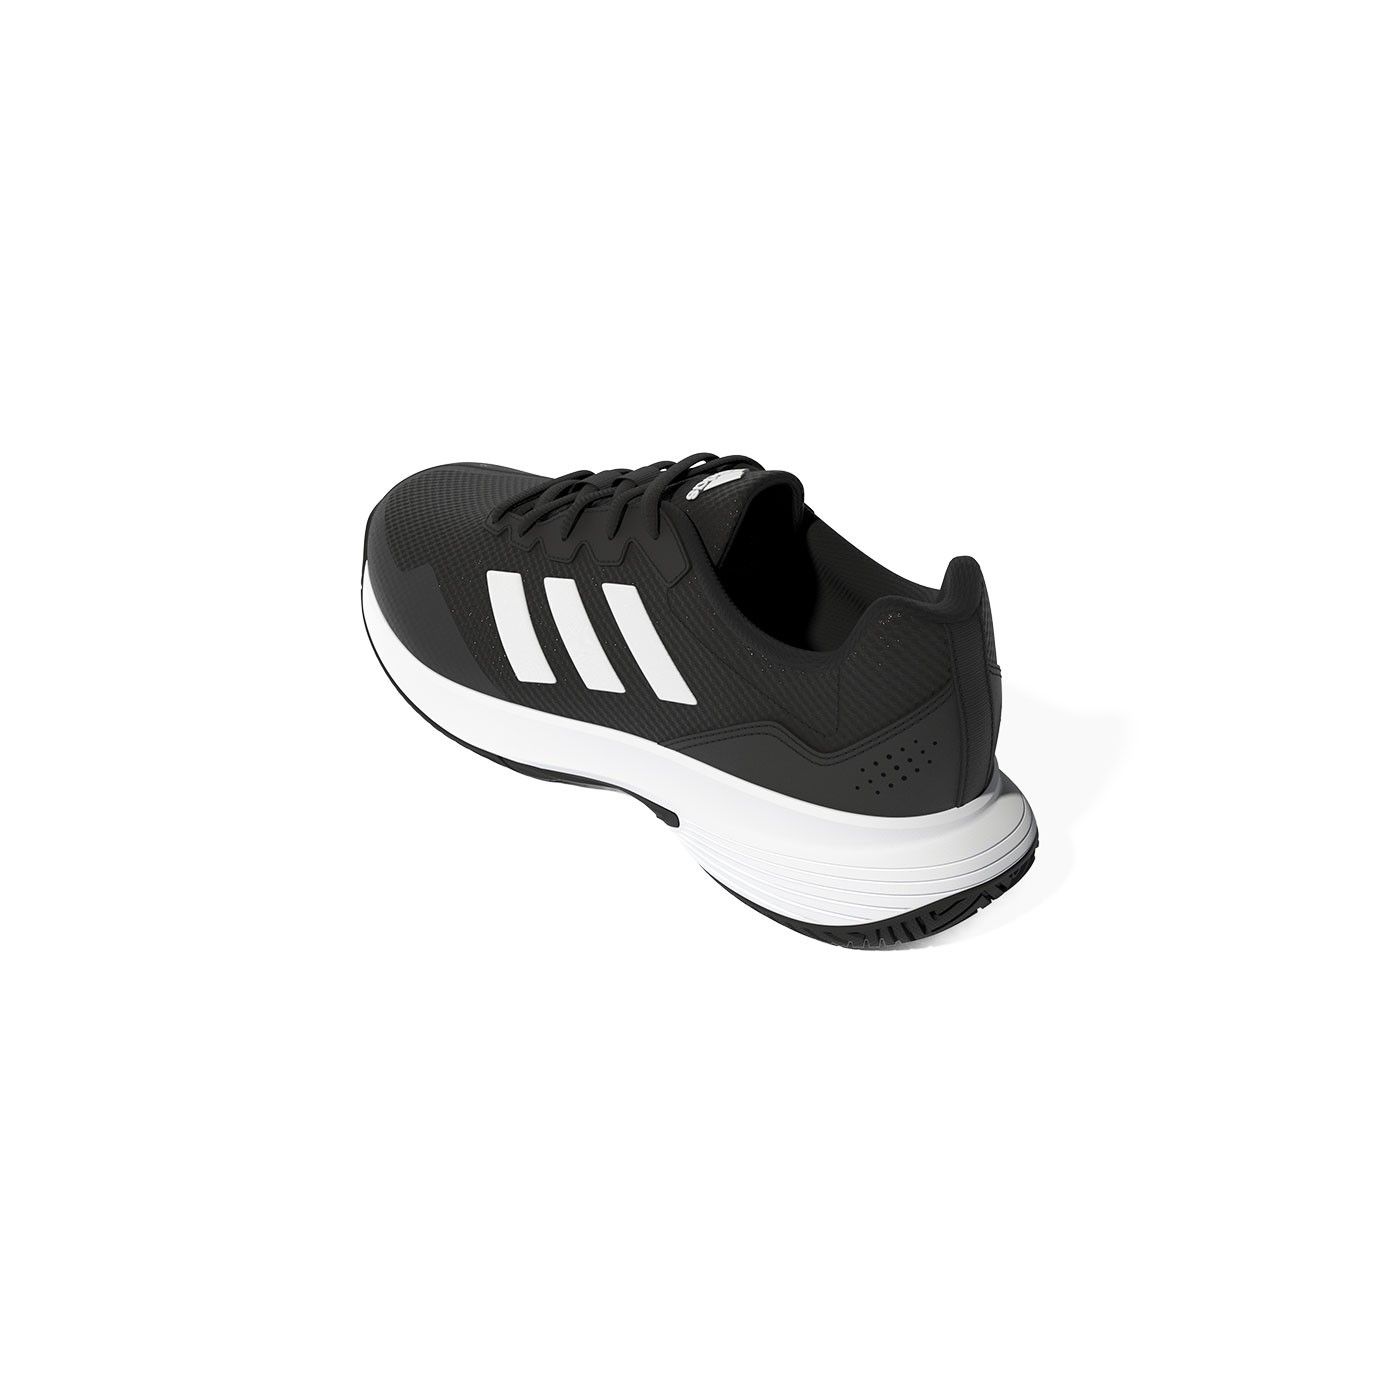 Adidas 2 Negro Blanco Gw2990 - OFERTAS